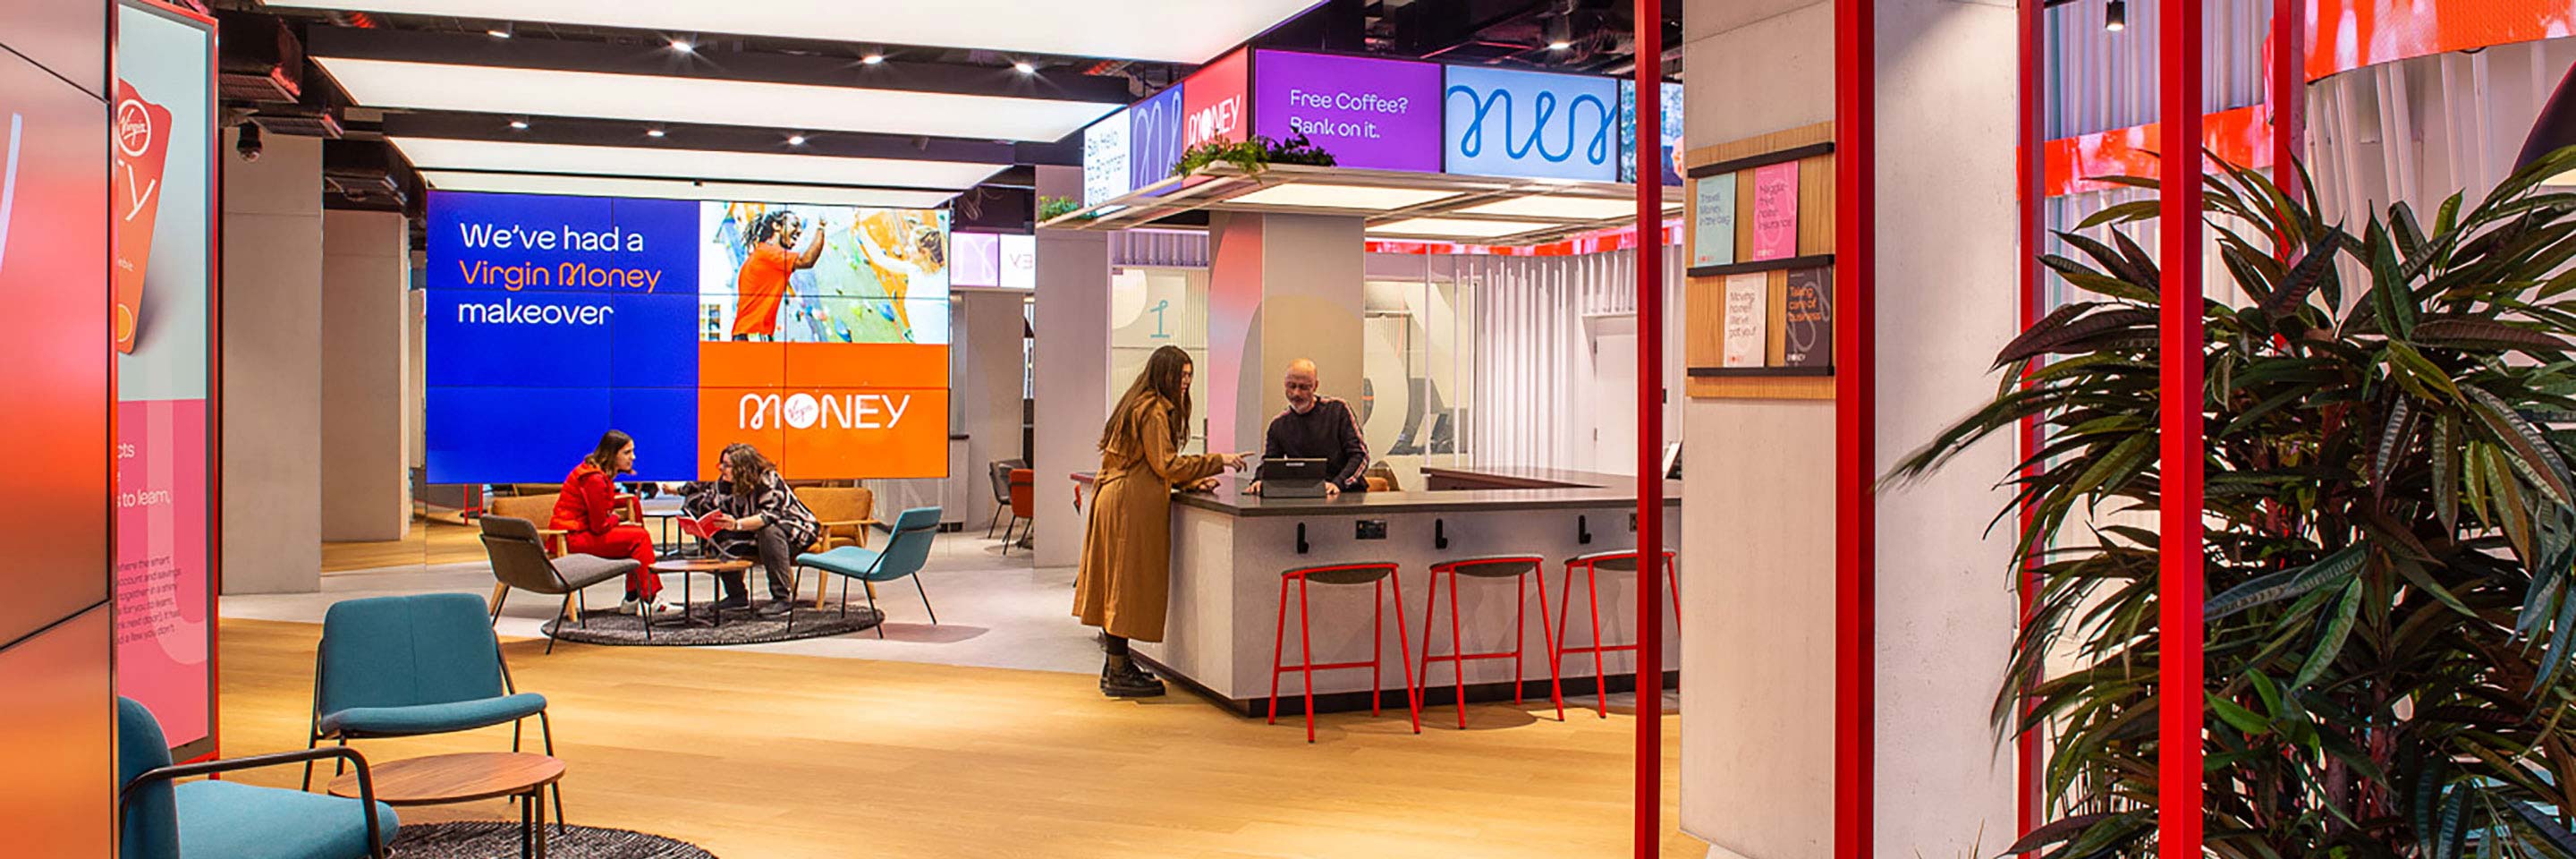 Virgin Money bank inspiring branch interior design lifestyle concept ideas and digital innovation.